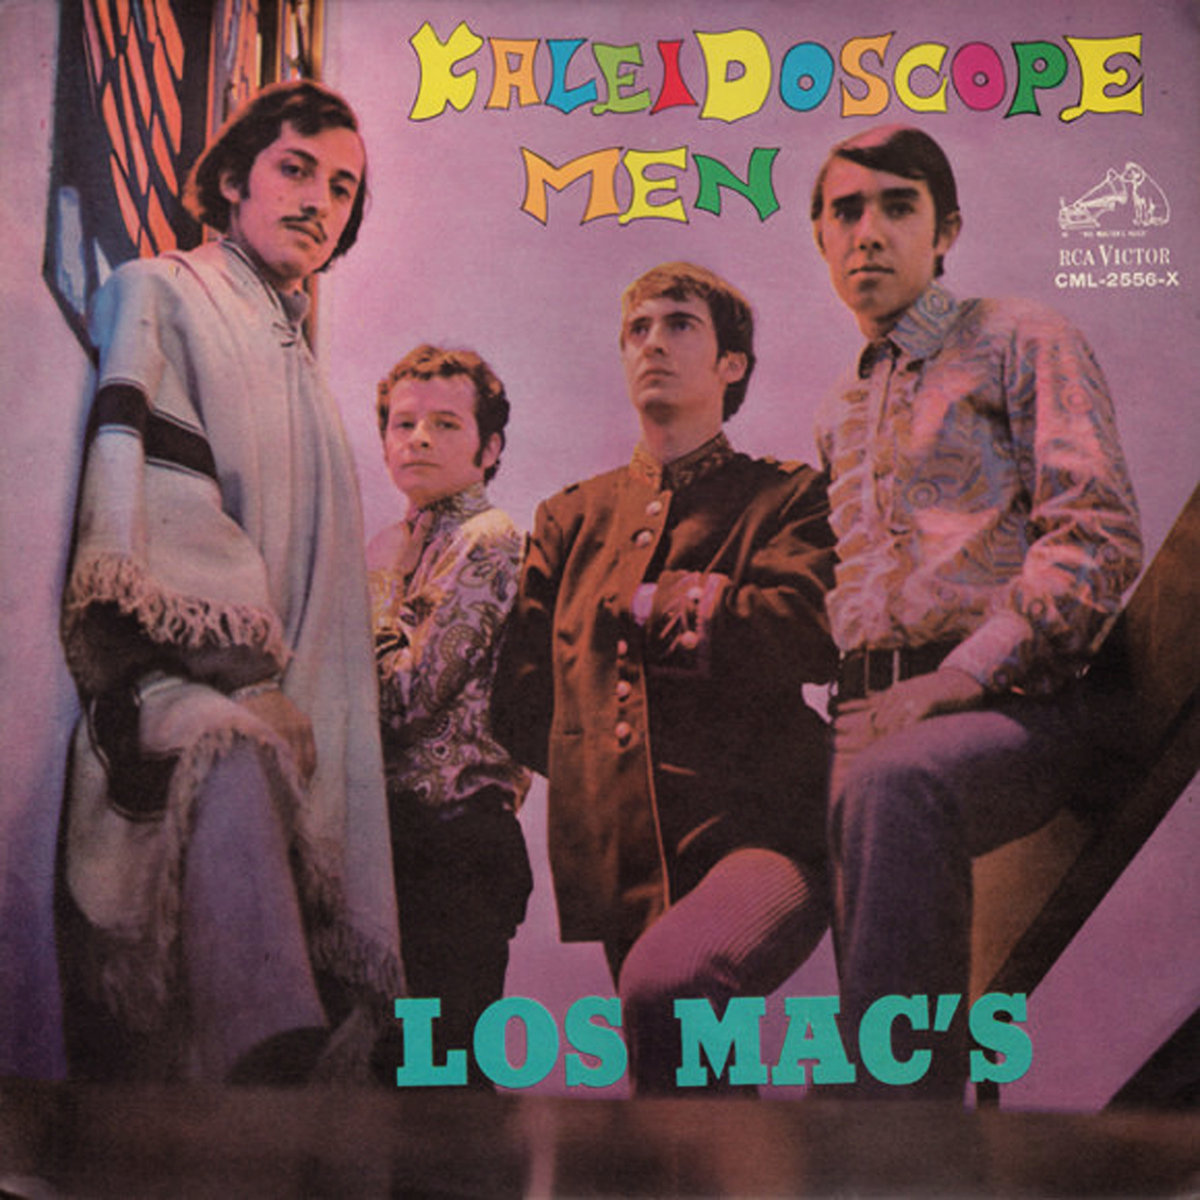 Kaleidoscope Man Mac's